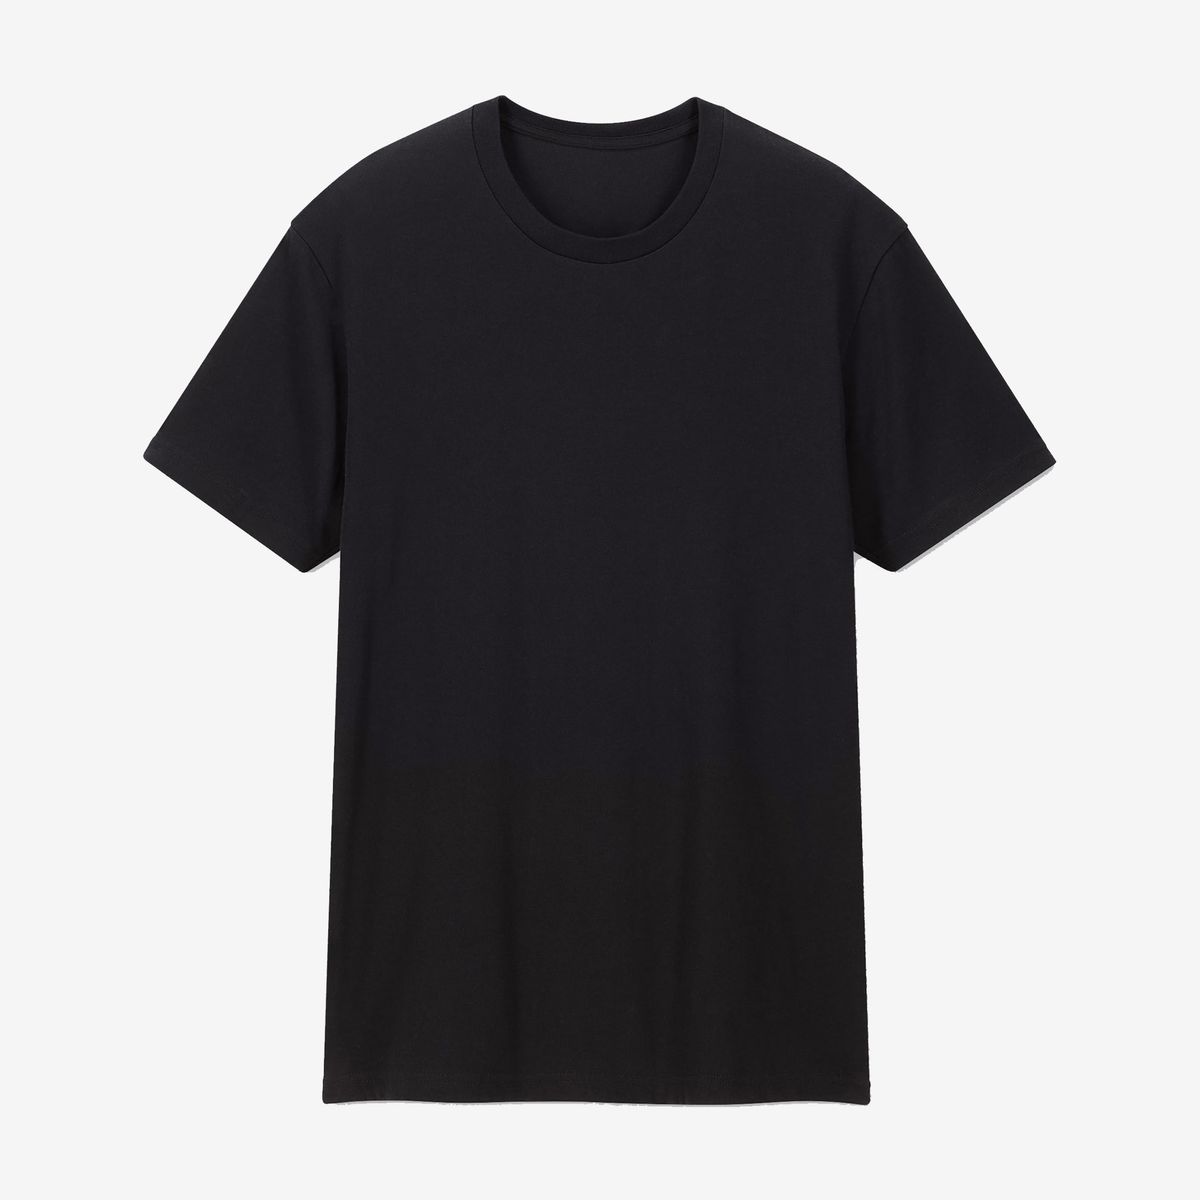 stylish black t shirt online